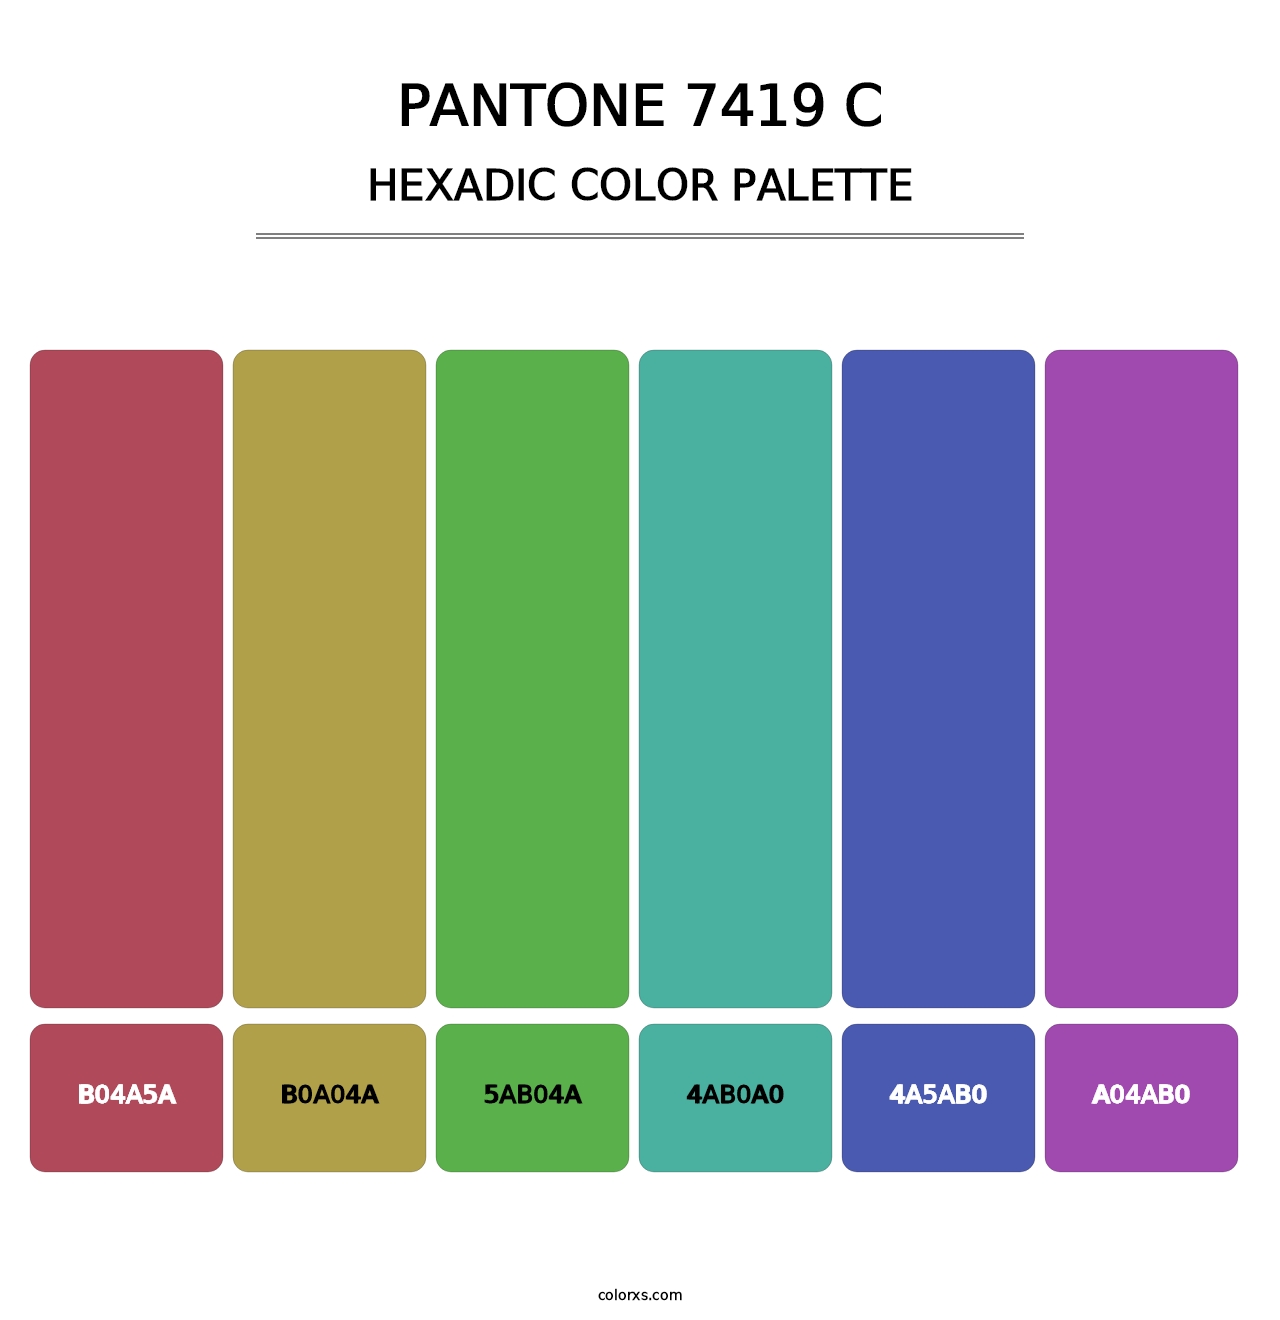 PANTONE 7419 C - Hexadic Color Palette